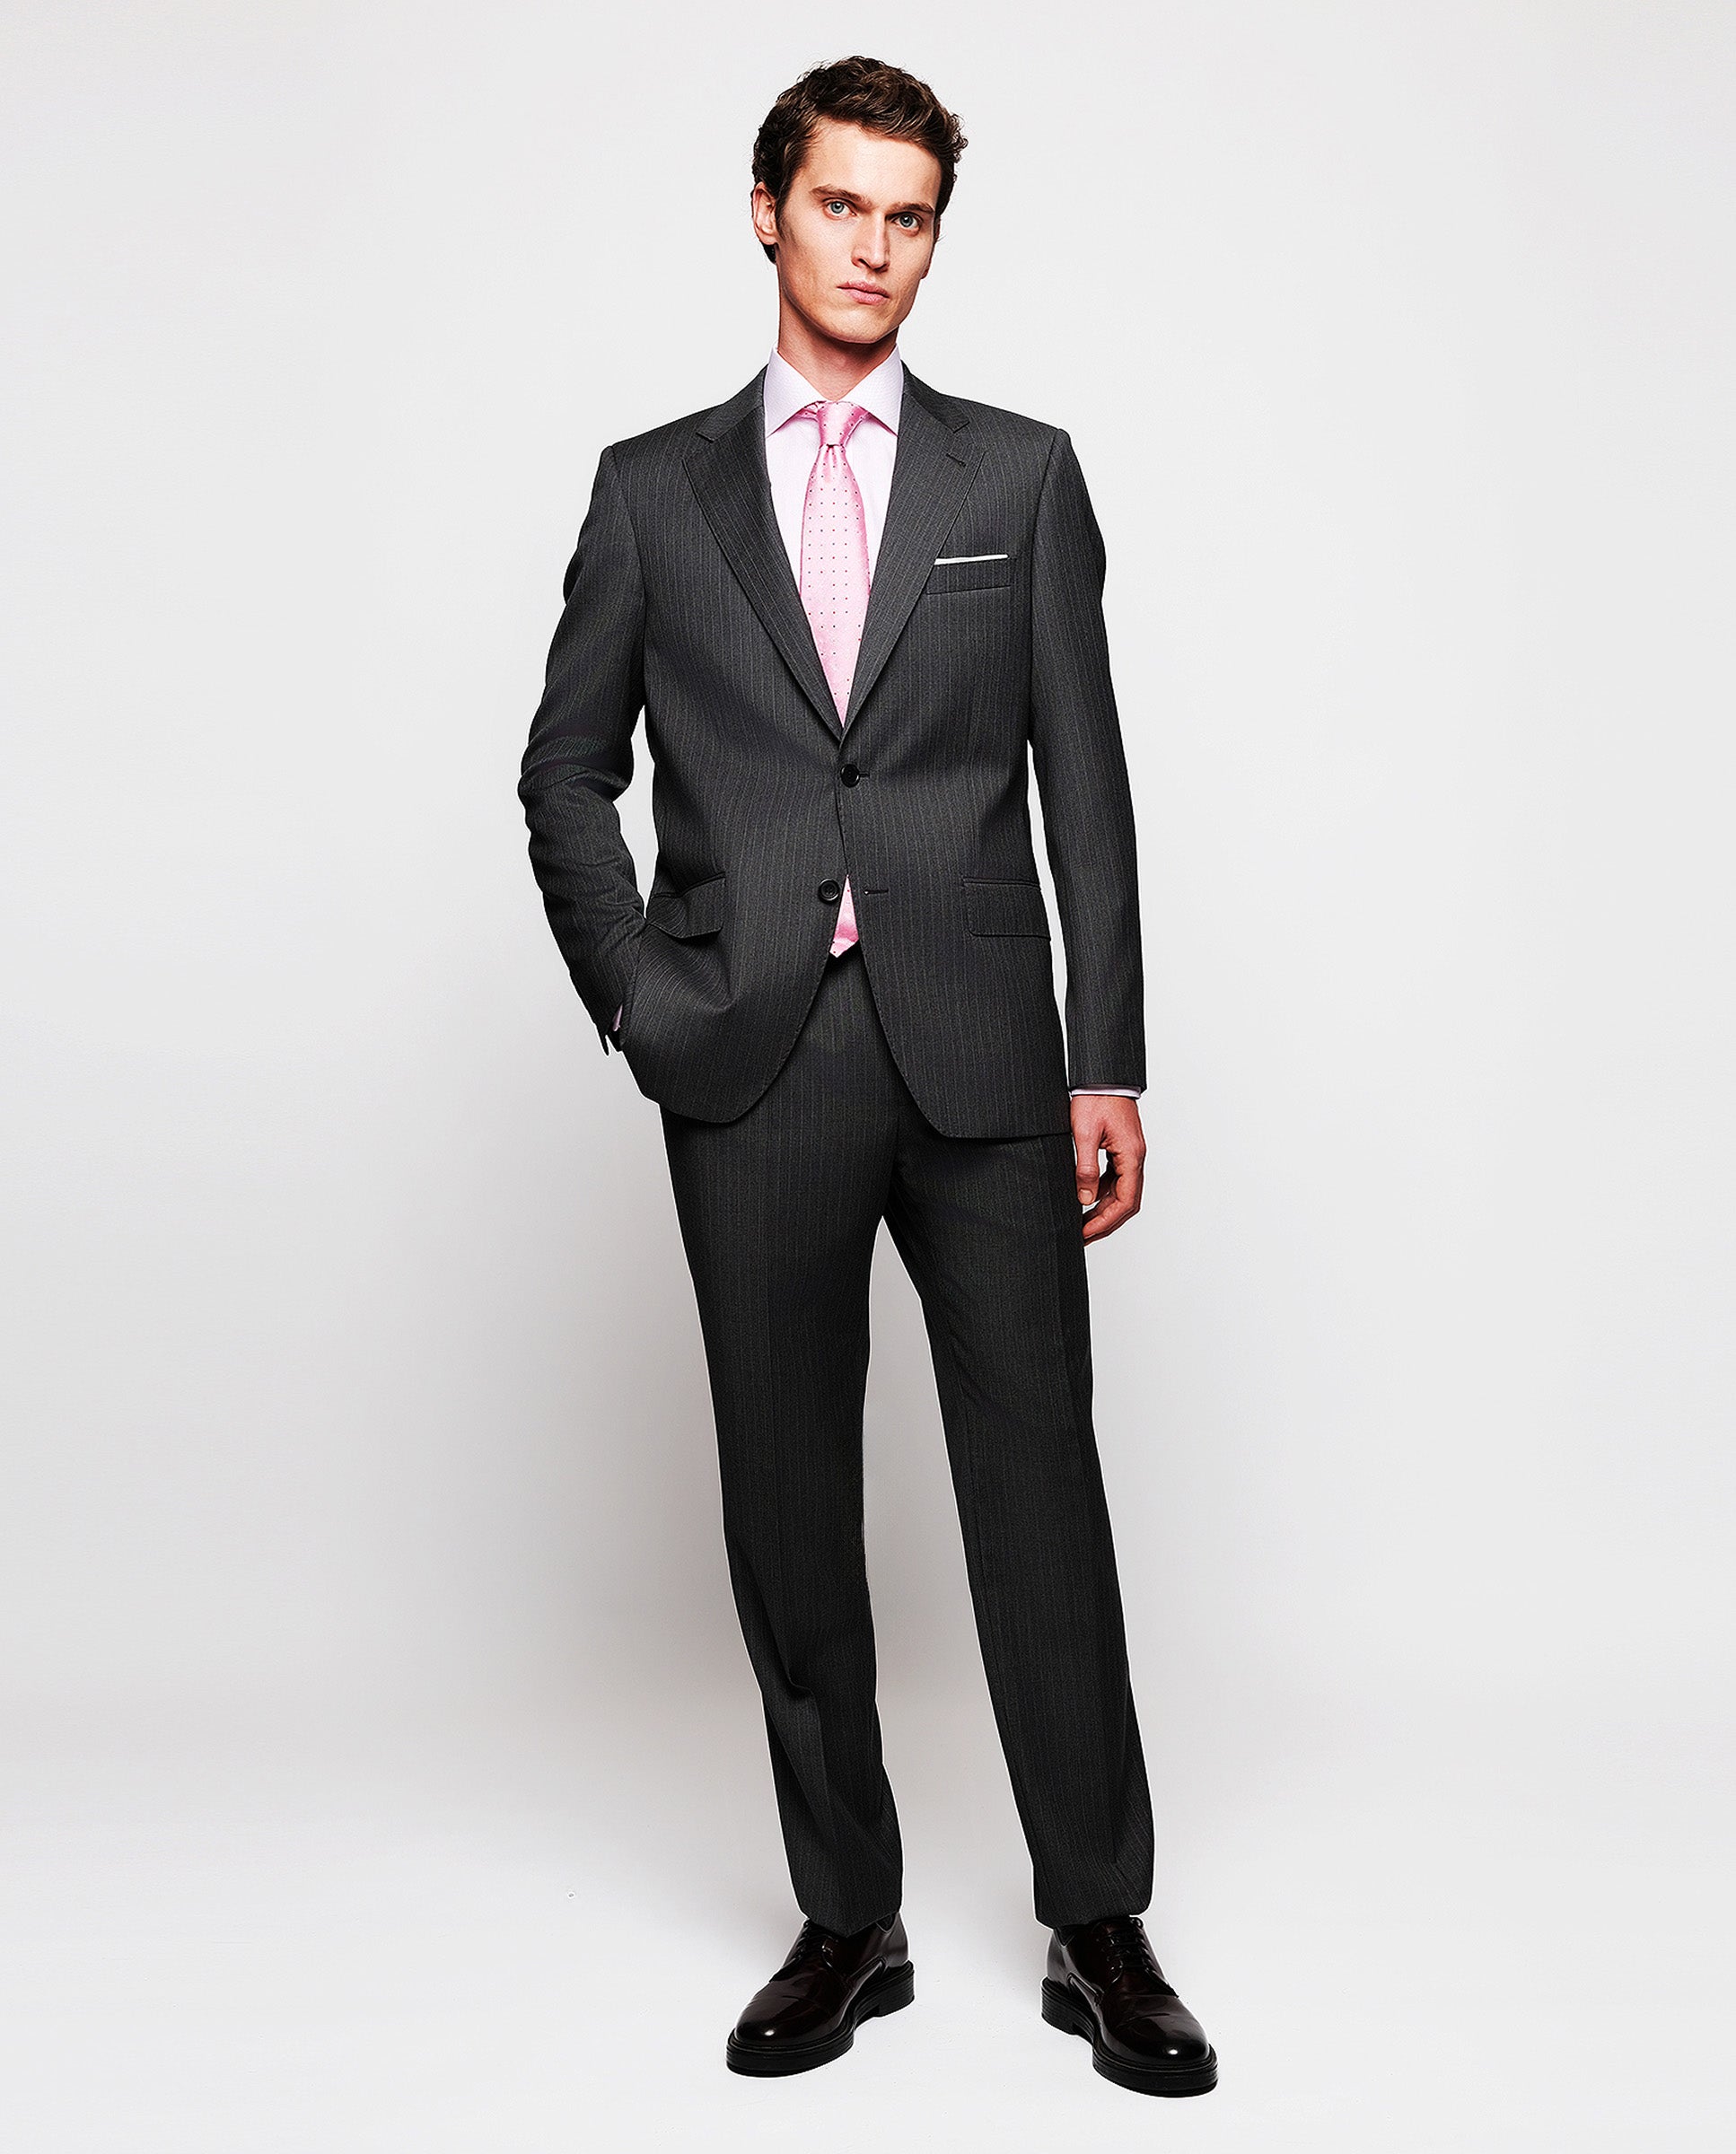 Gray pin stripe wool suit by MIRTO